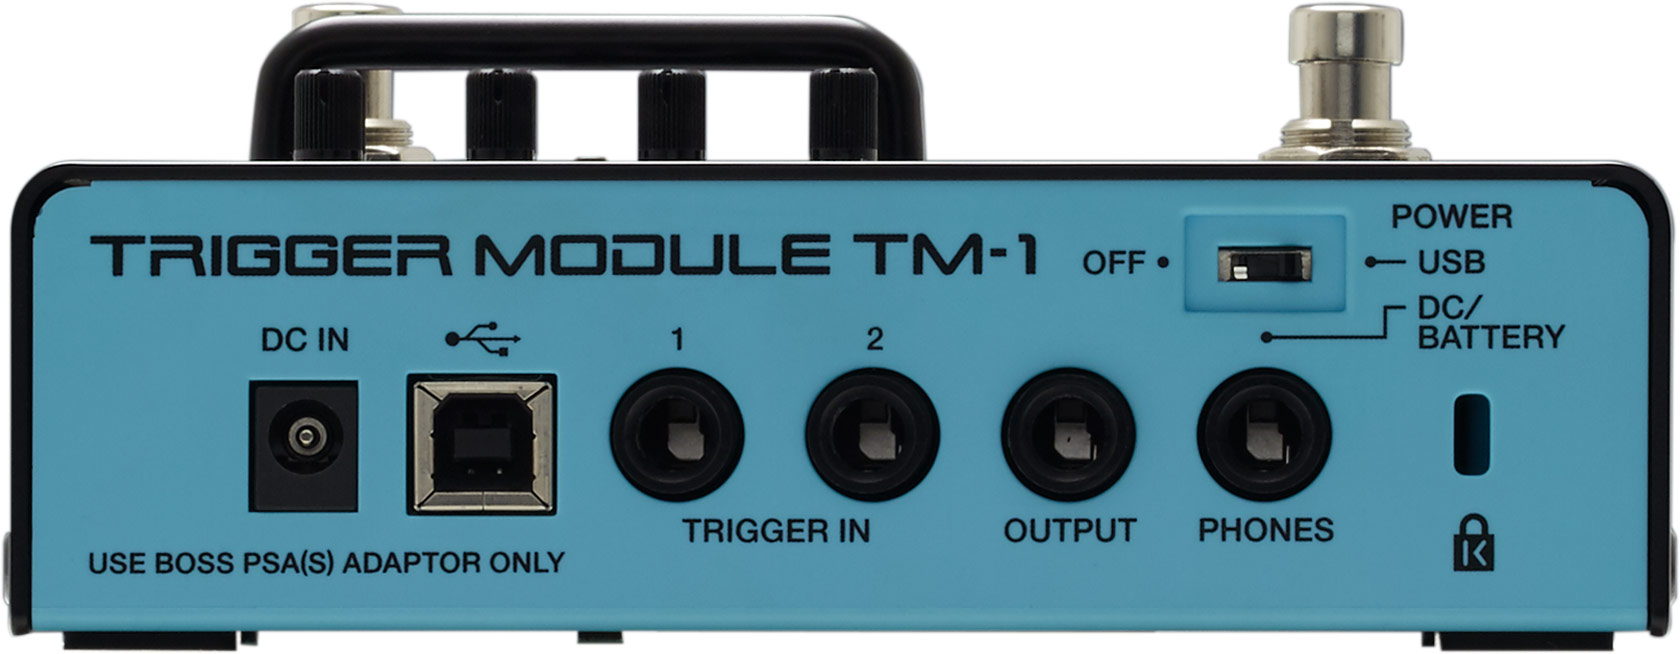 Roland Tm-1 Trigger Module - Trigger für E-Drums - Variation 2